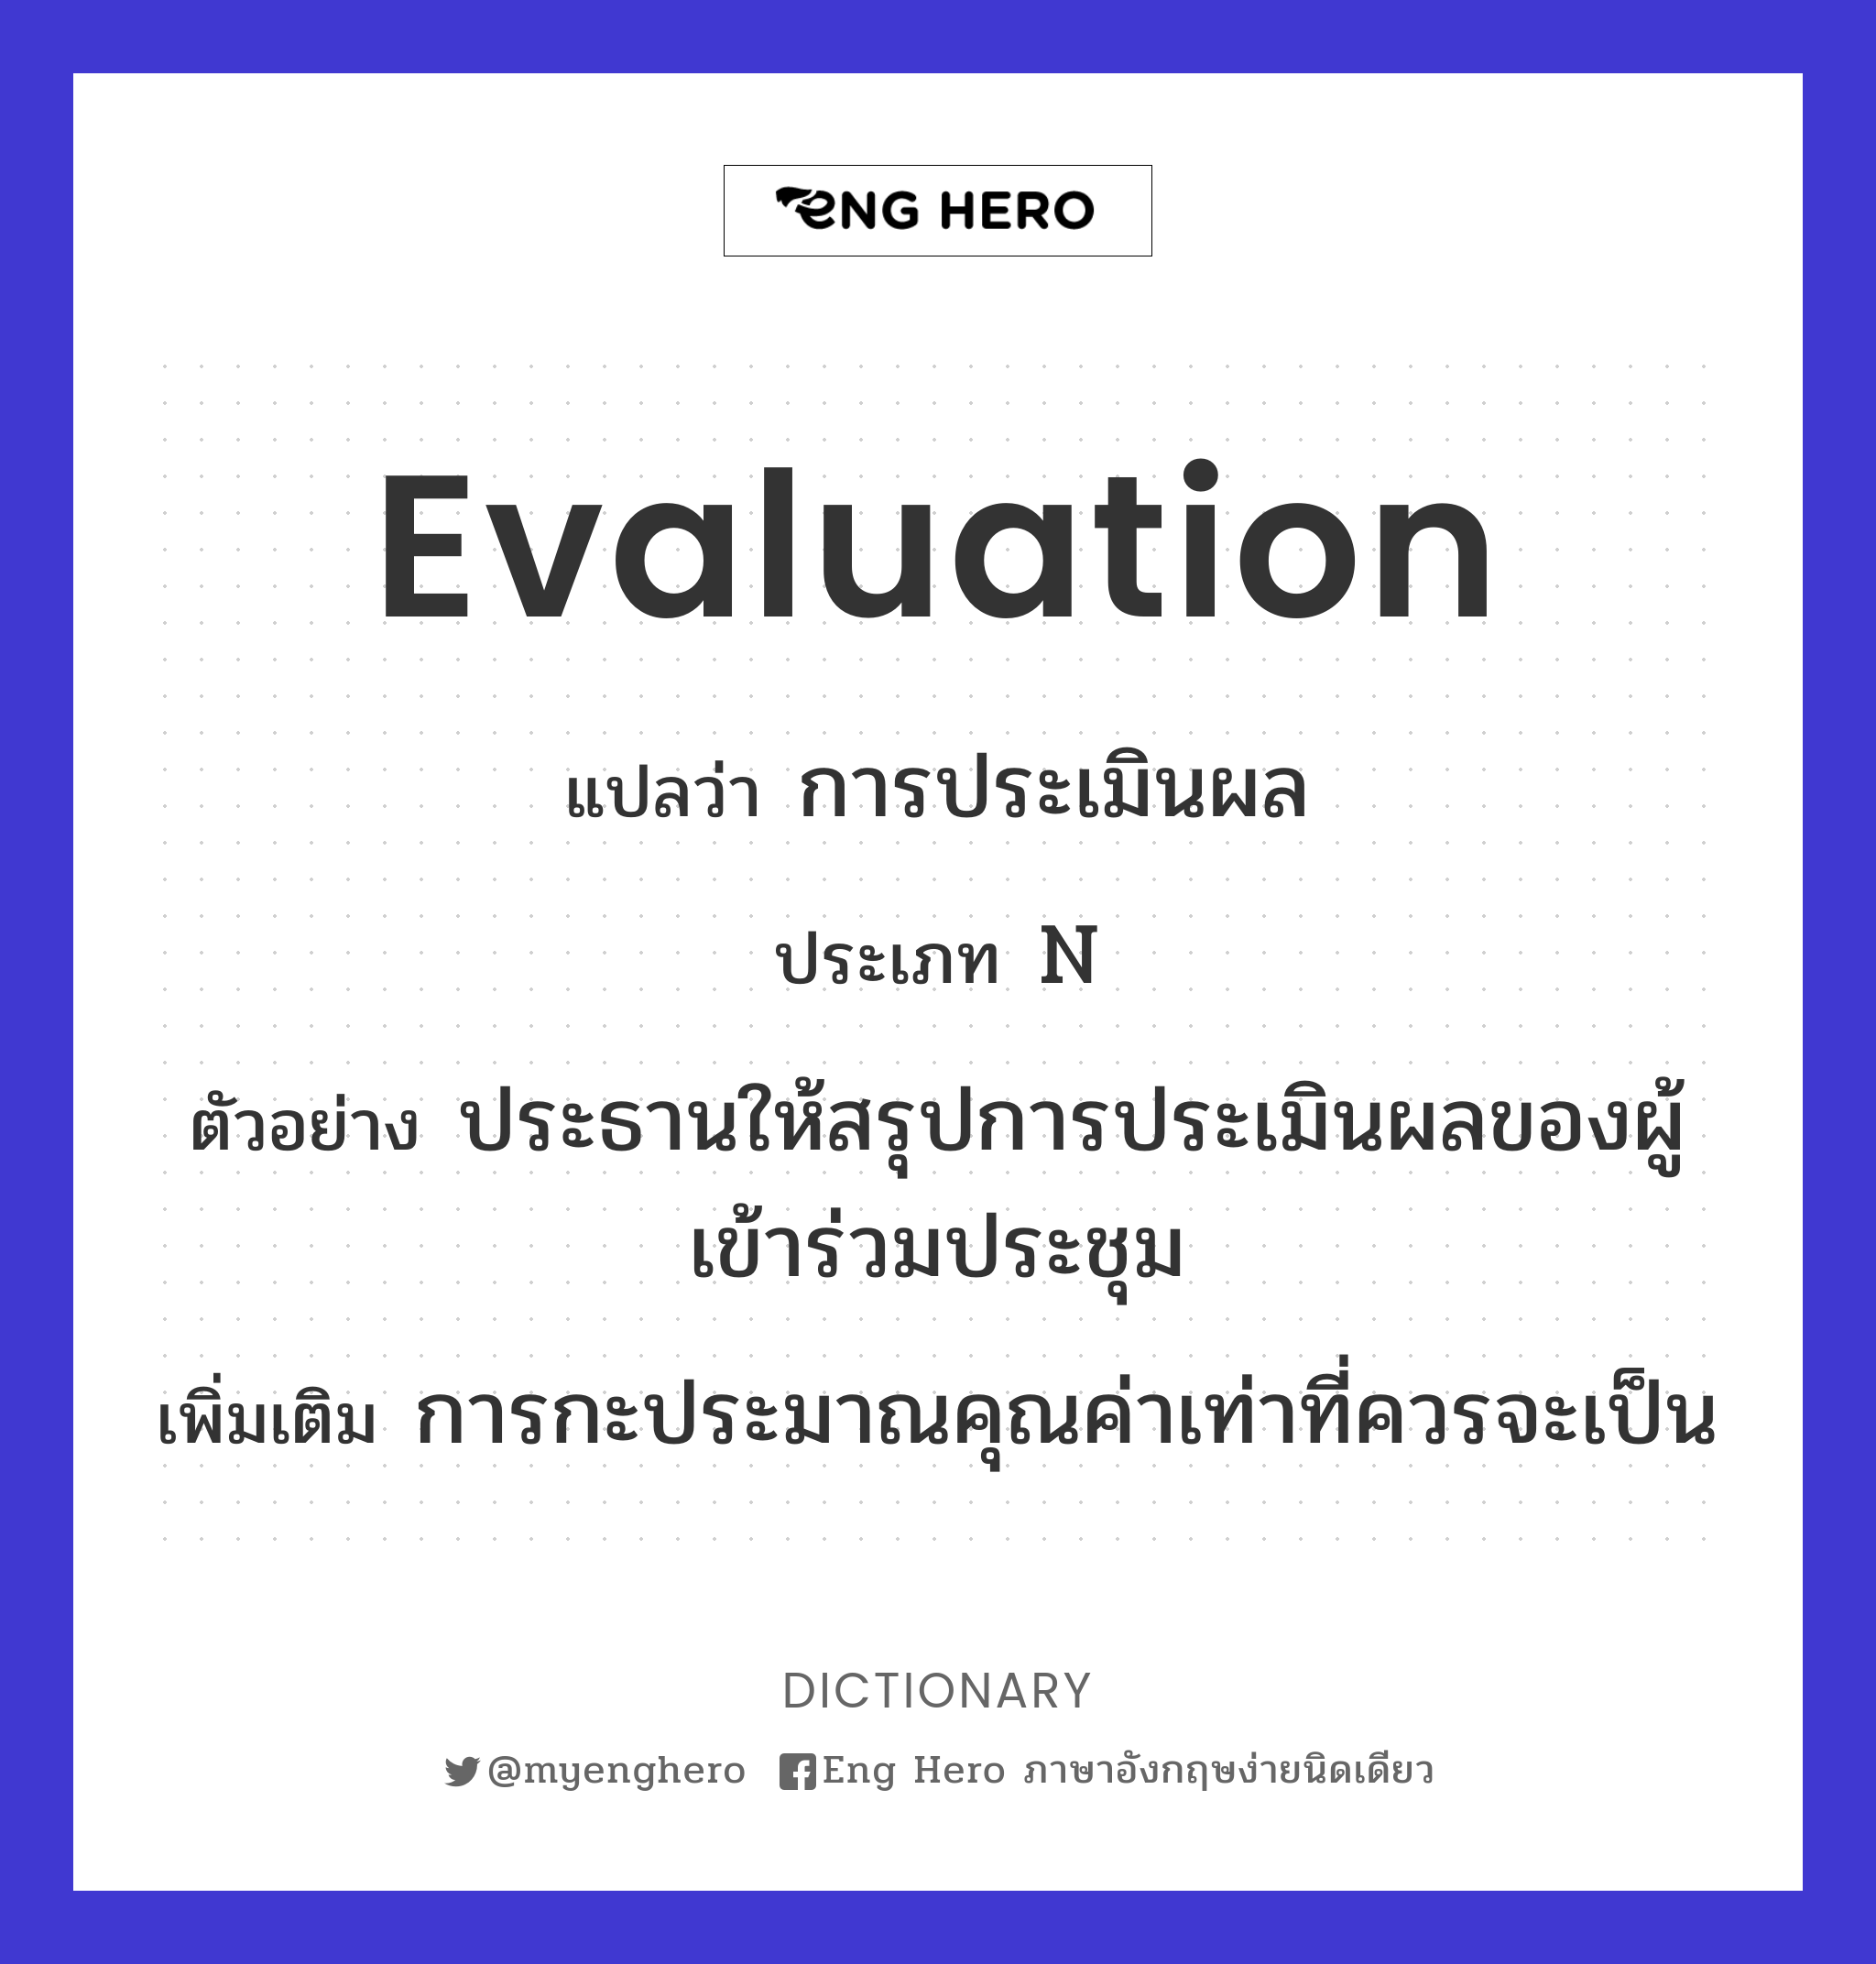 evaluation